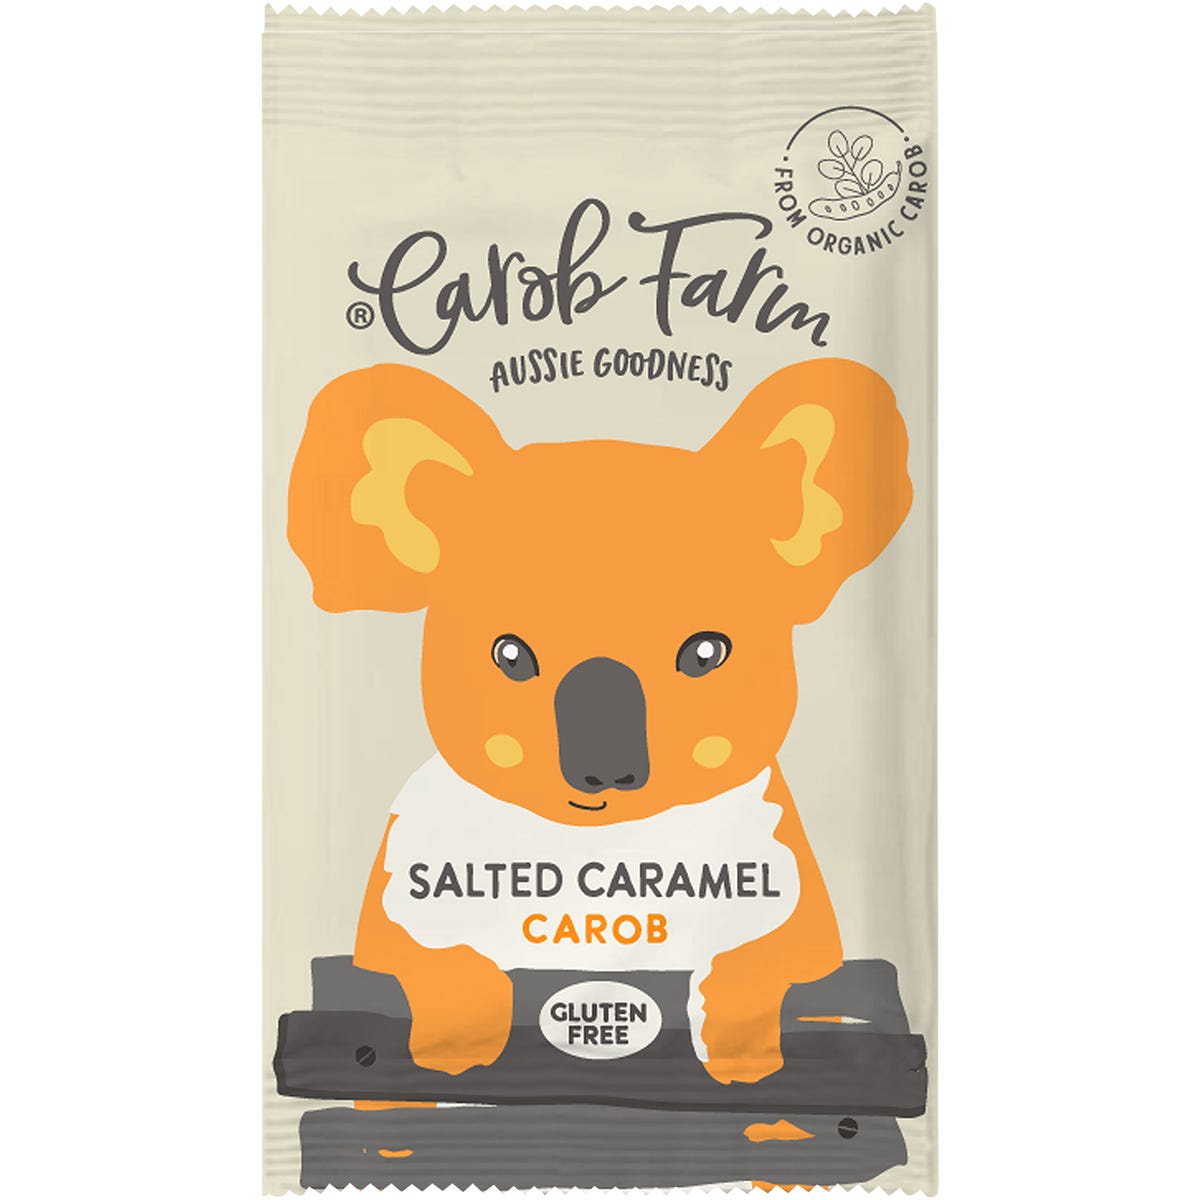 Carob Farm Carob Koala Salted Caramel 15g - Dr Earth - Chocolate & Carob